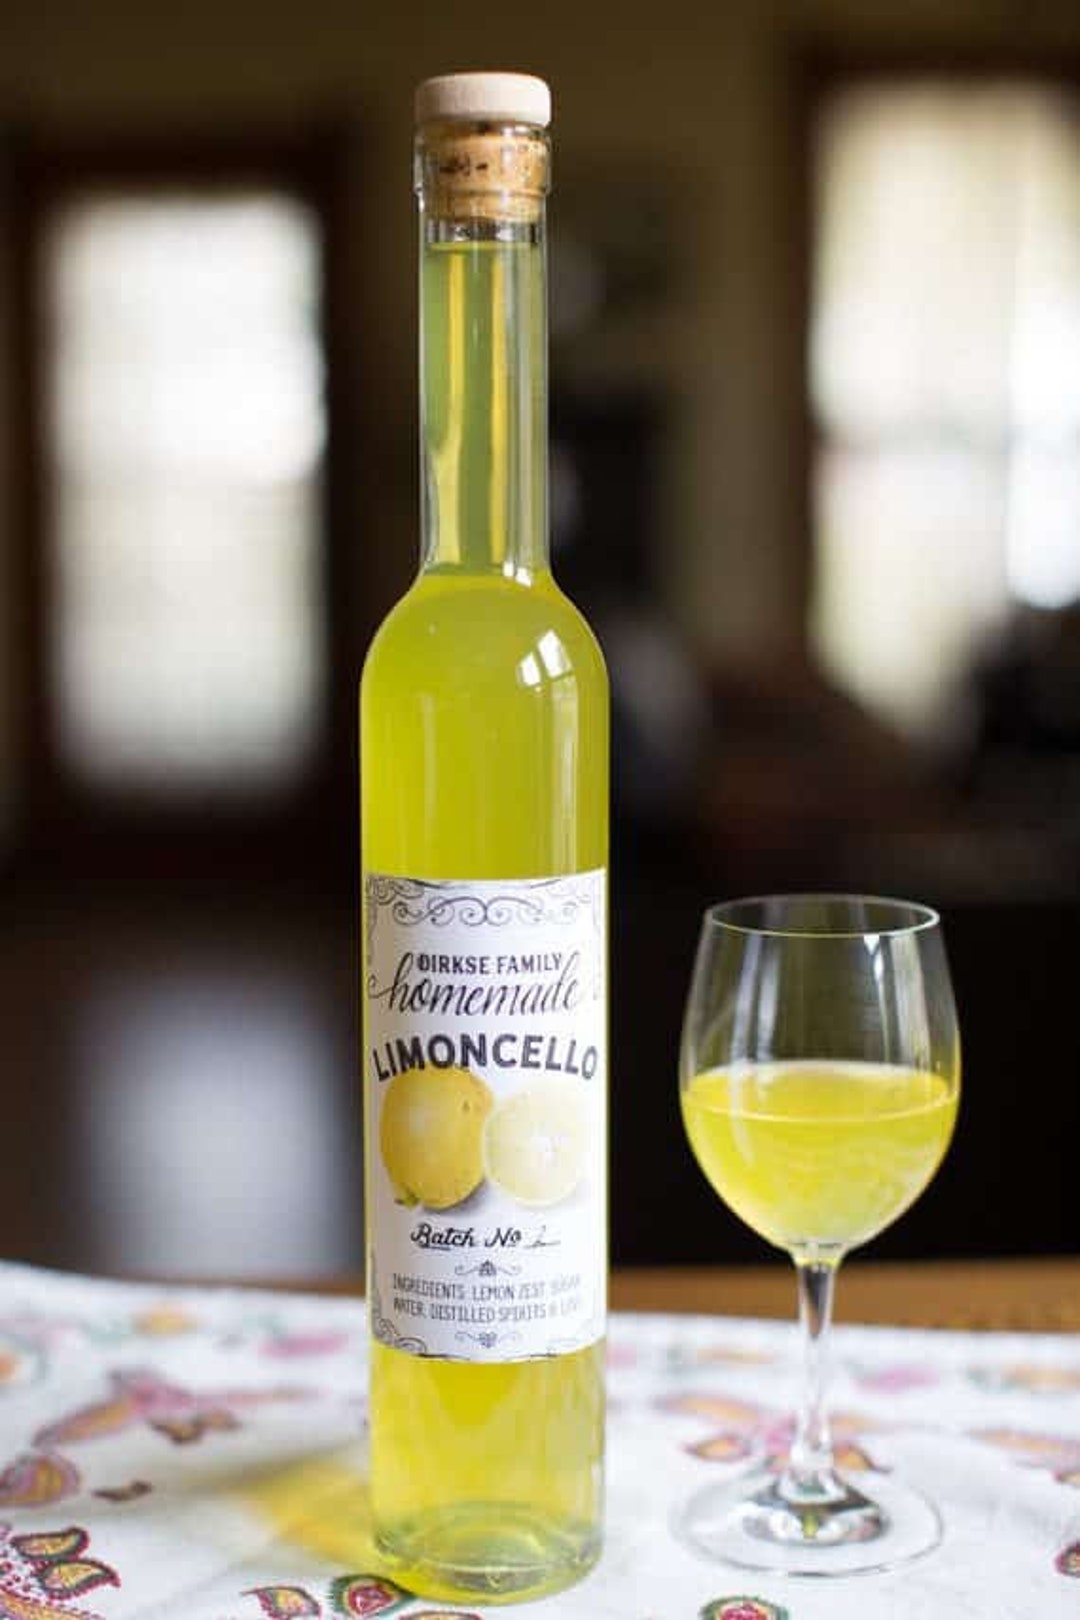 Premium Photo  Italian drink lemon liqueur limoncello in glasses on the  wooden table.